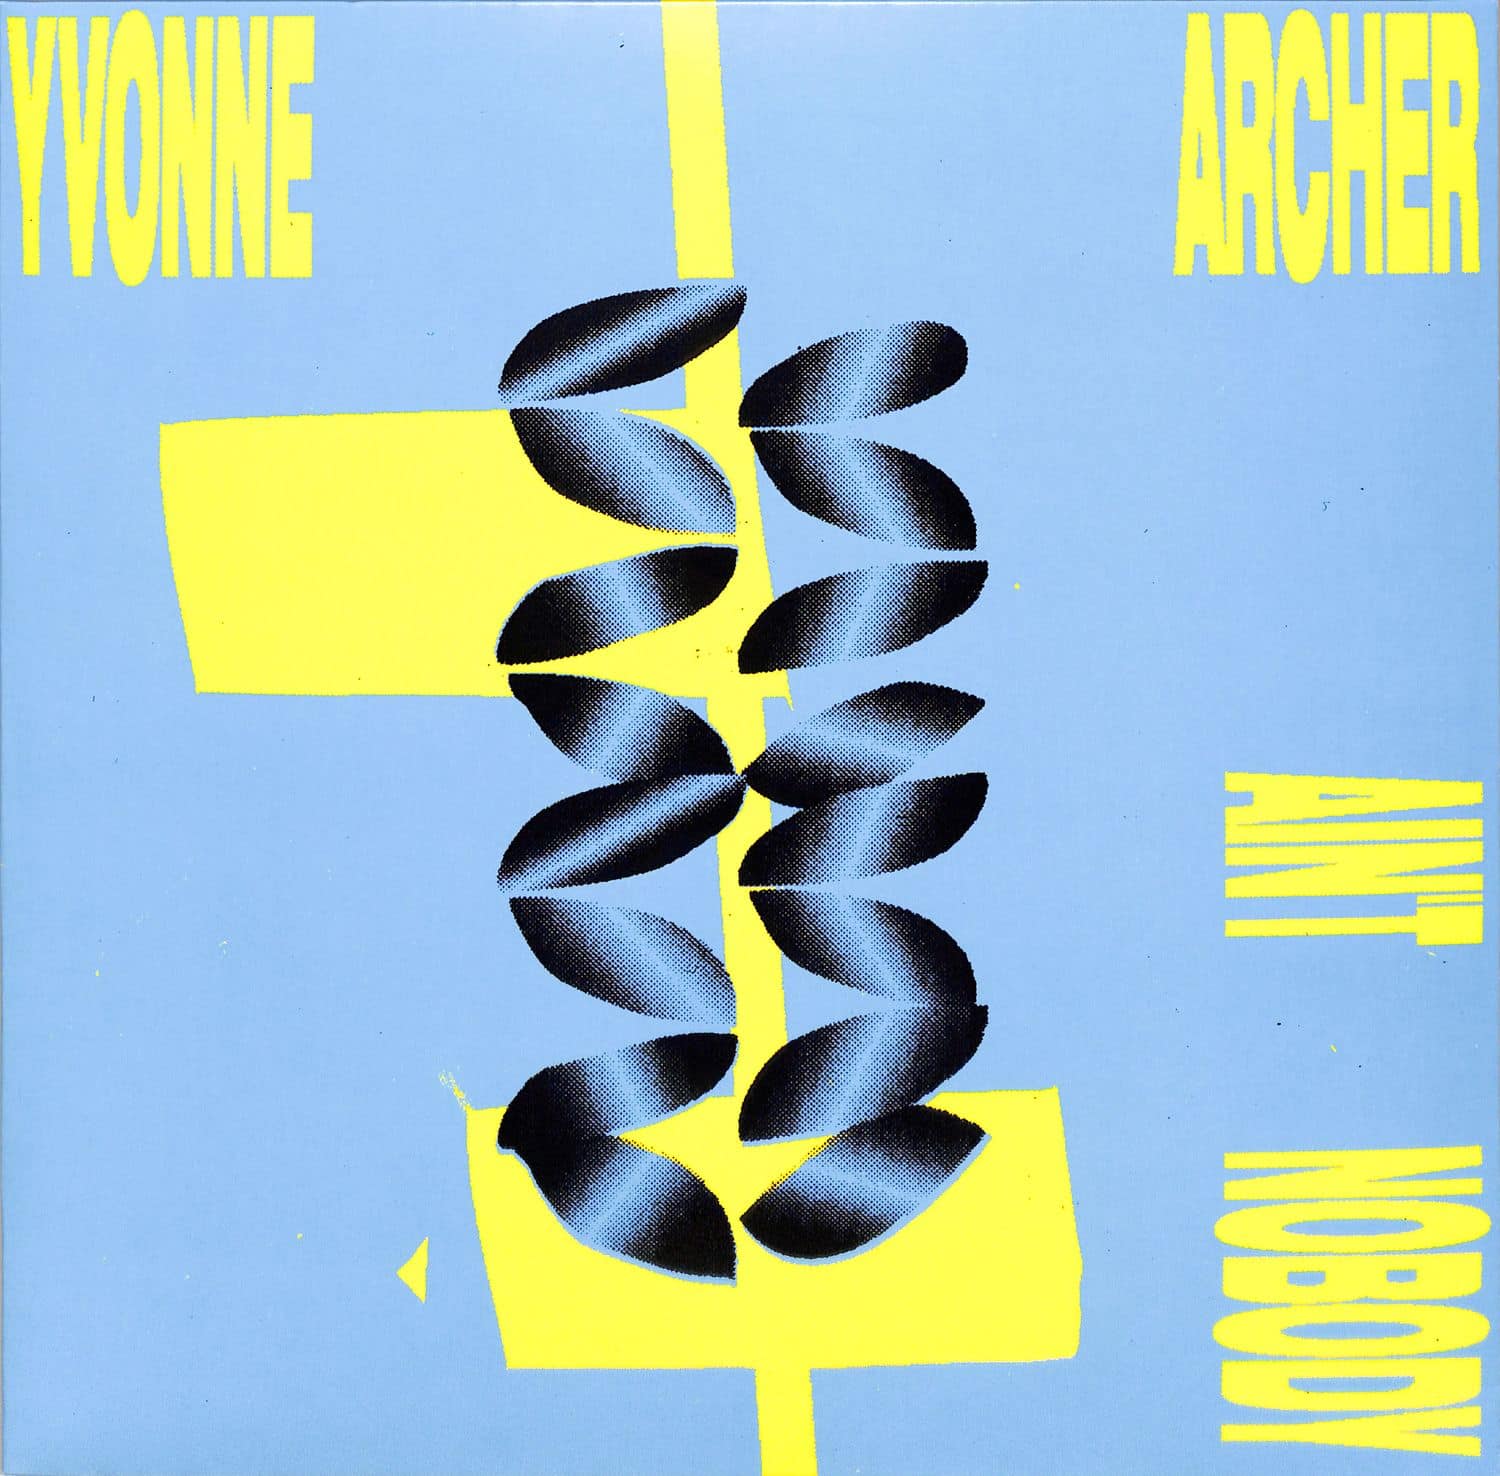 Yvonne Archer - AINT NOBODY